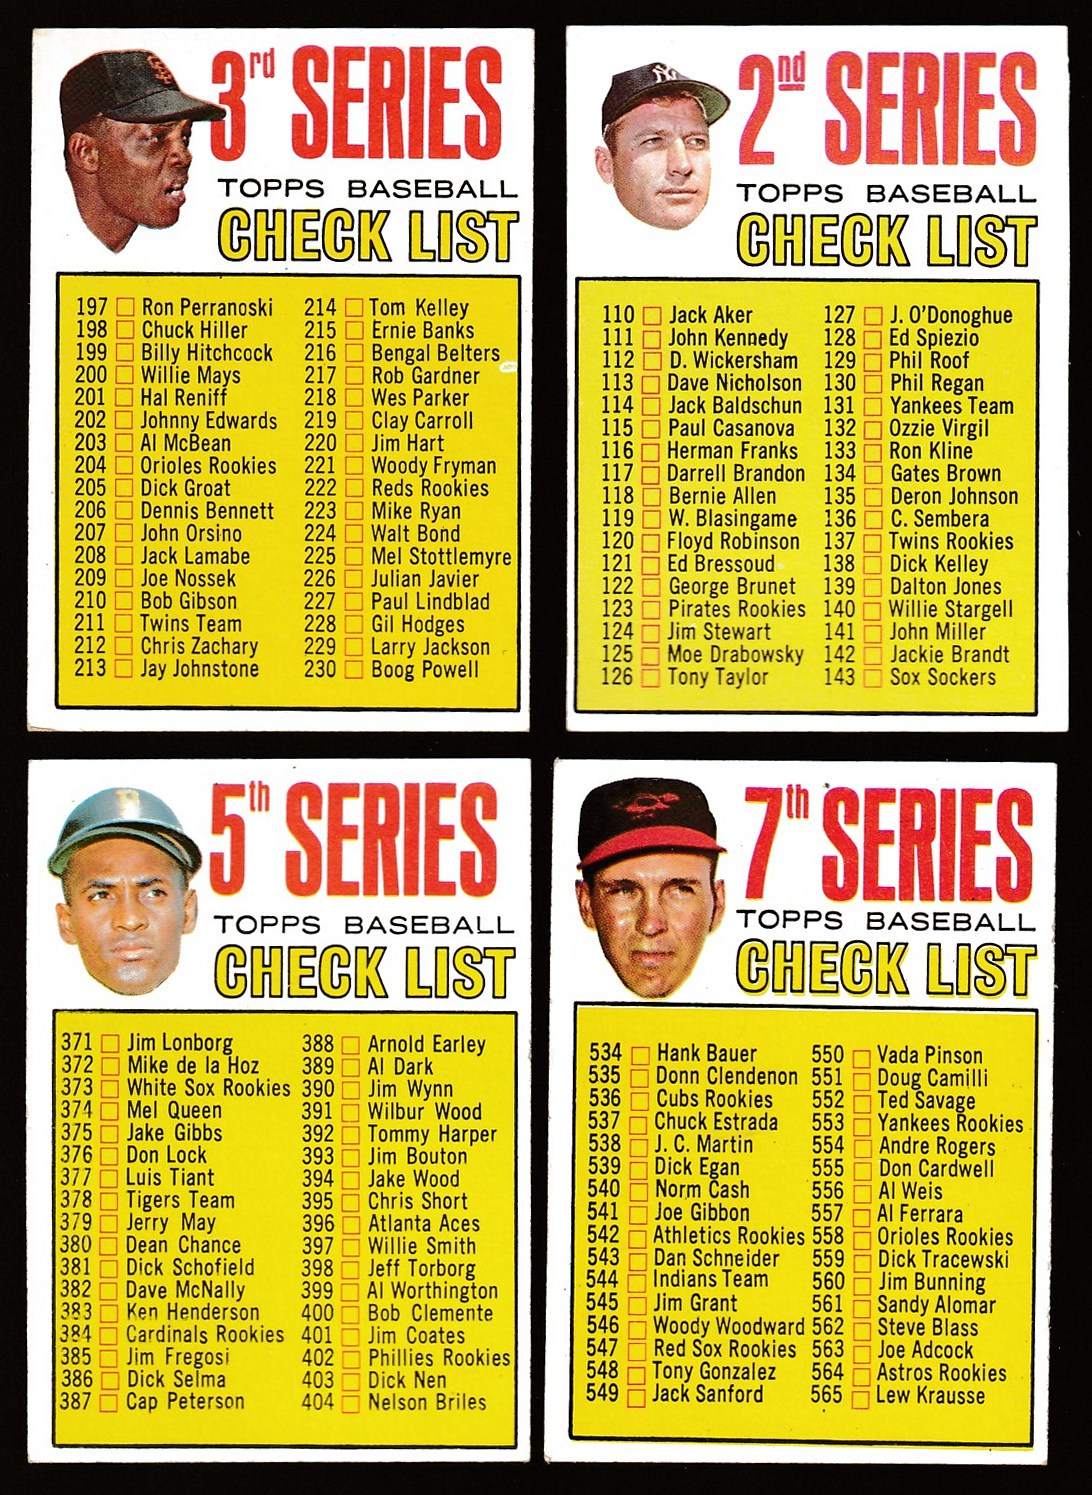 1967 Topps Baseball Card Checklist